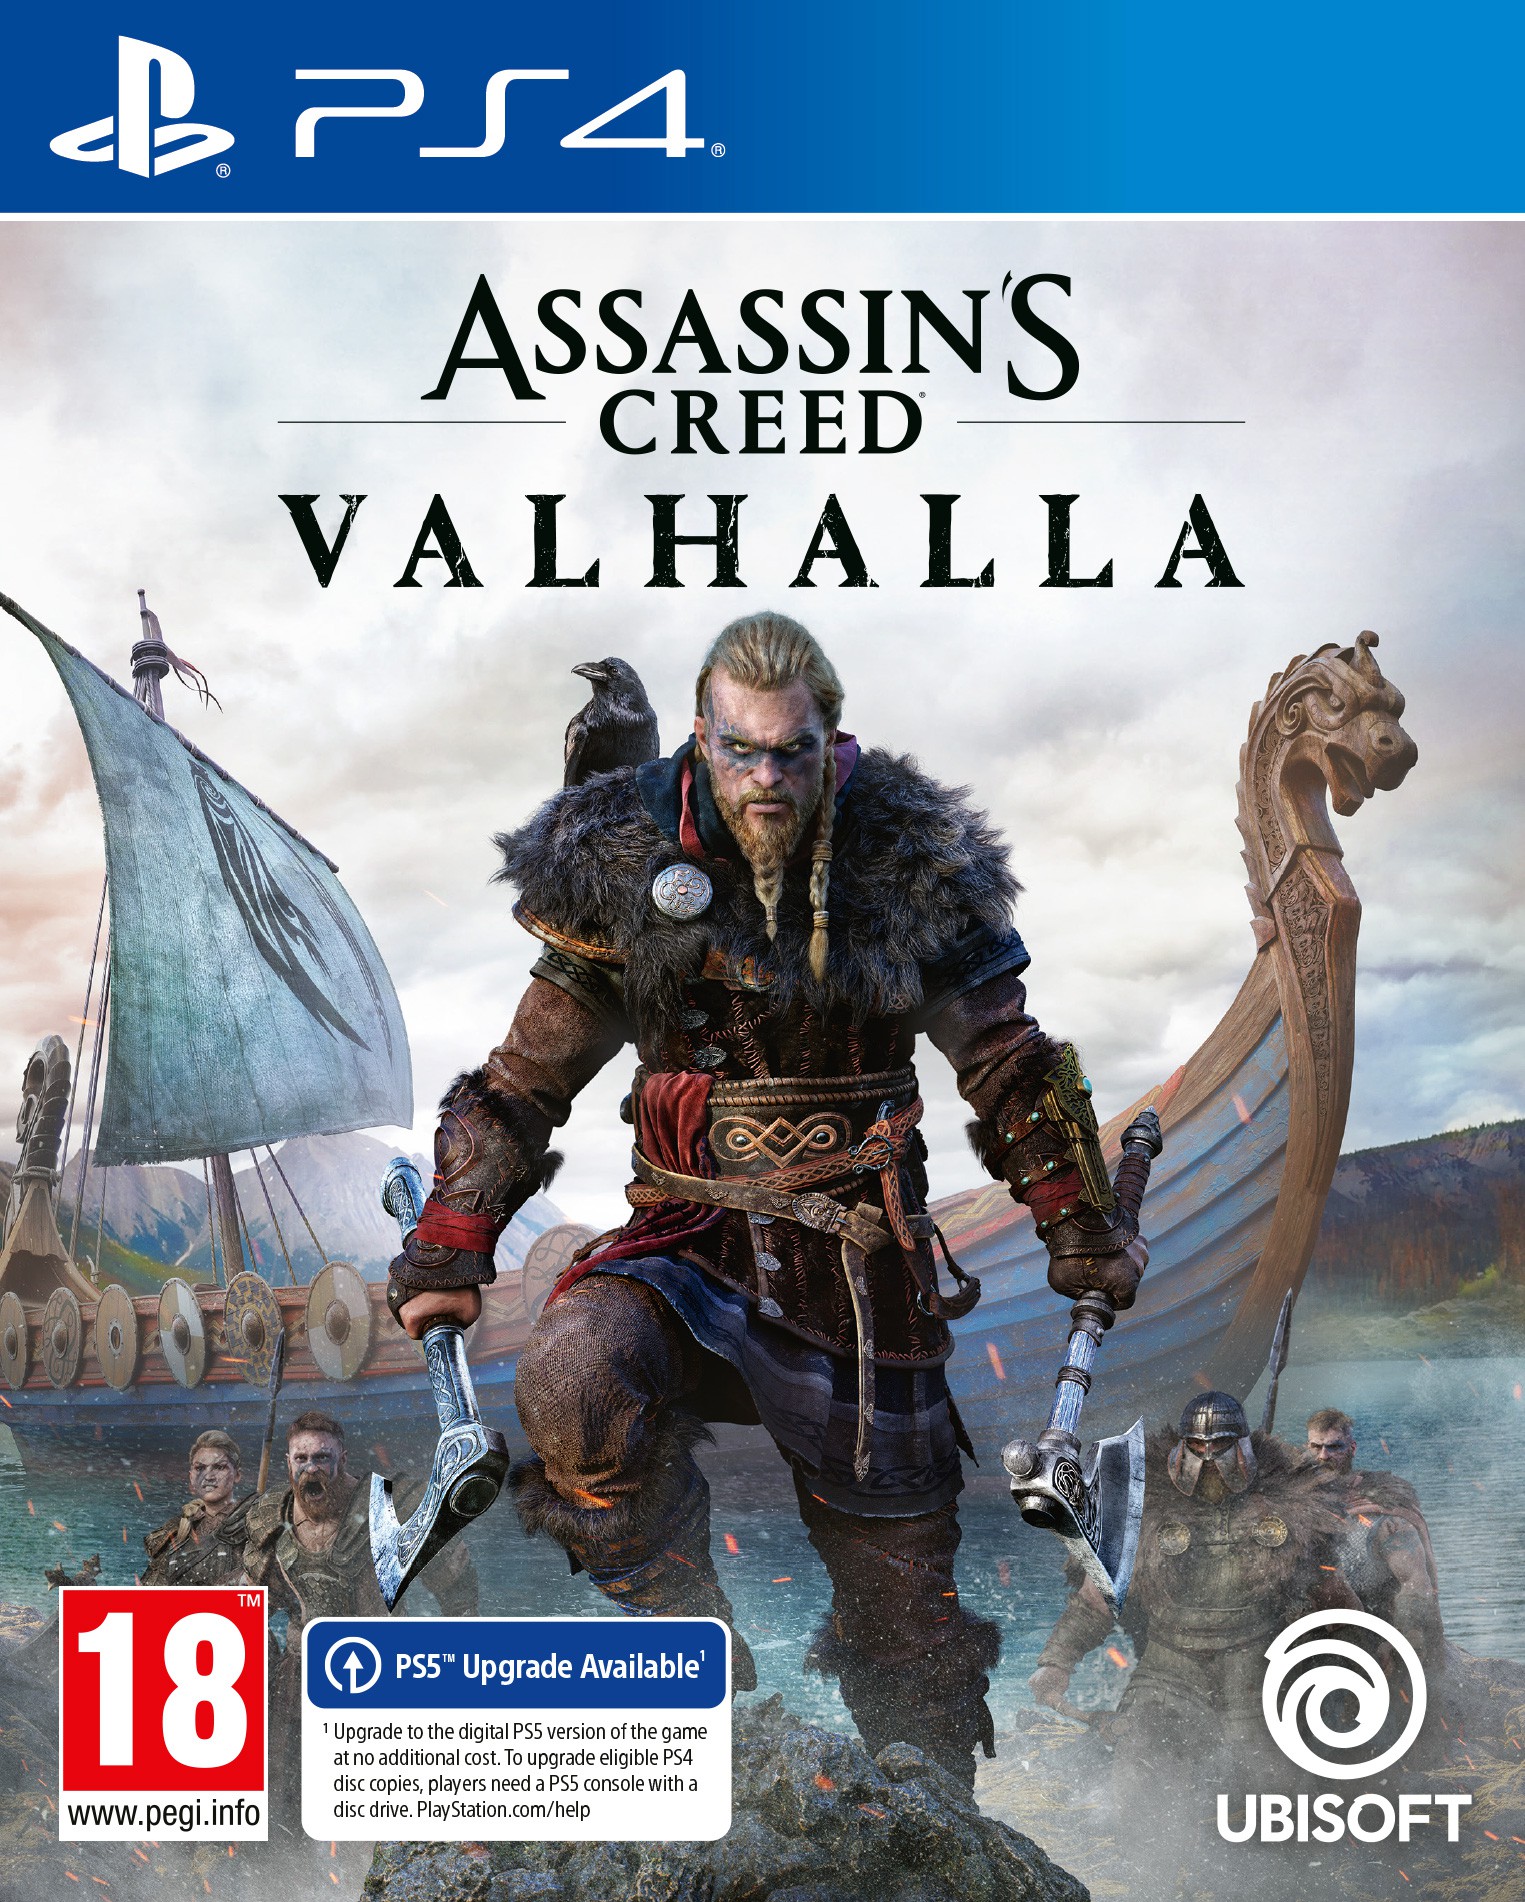 Assassin's Creed Valhalla Standard Edition